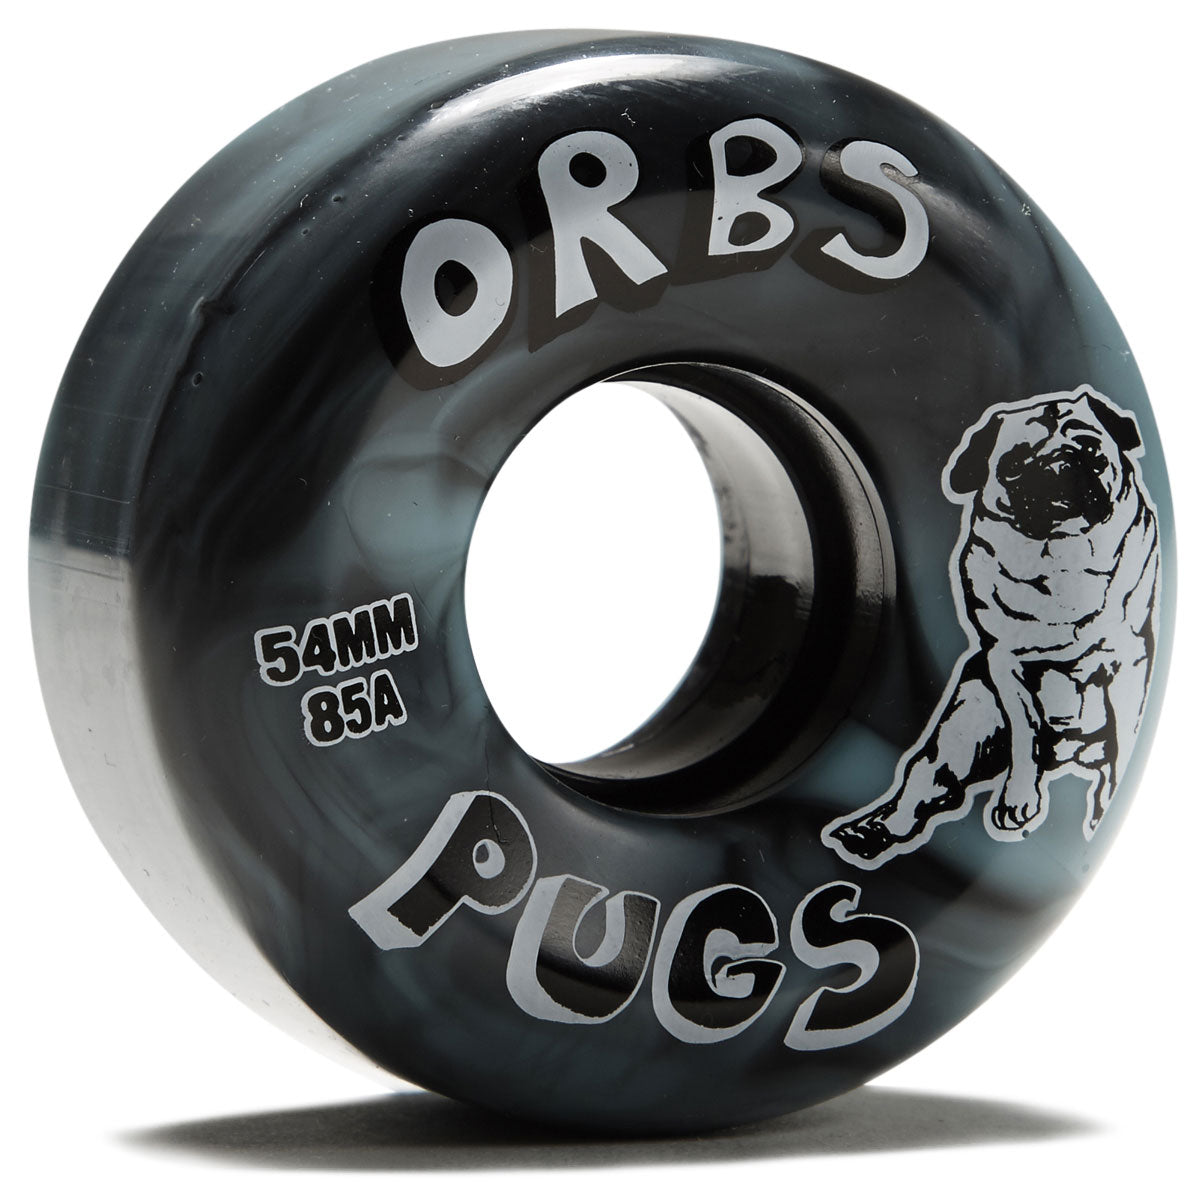 Welcome Orbs Pugs Conical 85A Skateboard Wheels - Black/Blue Swirl - 54mm image 1